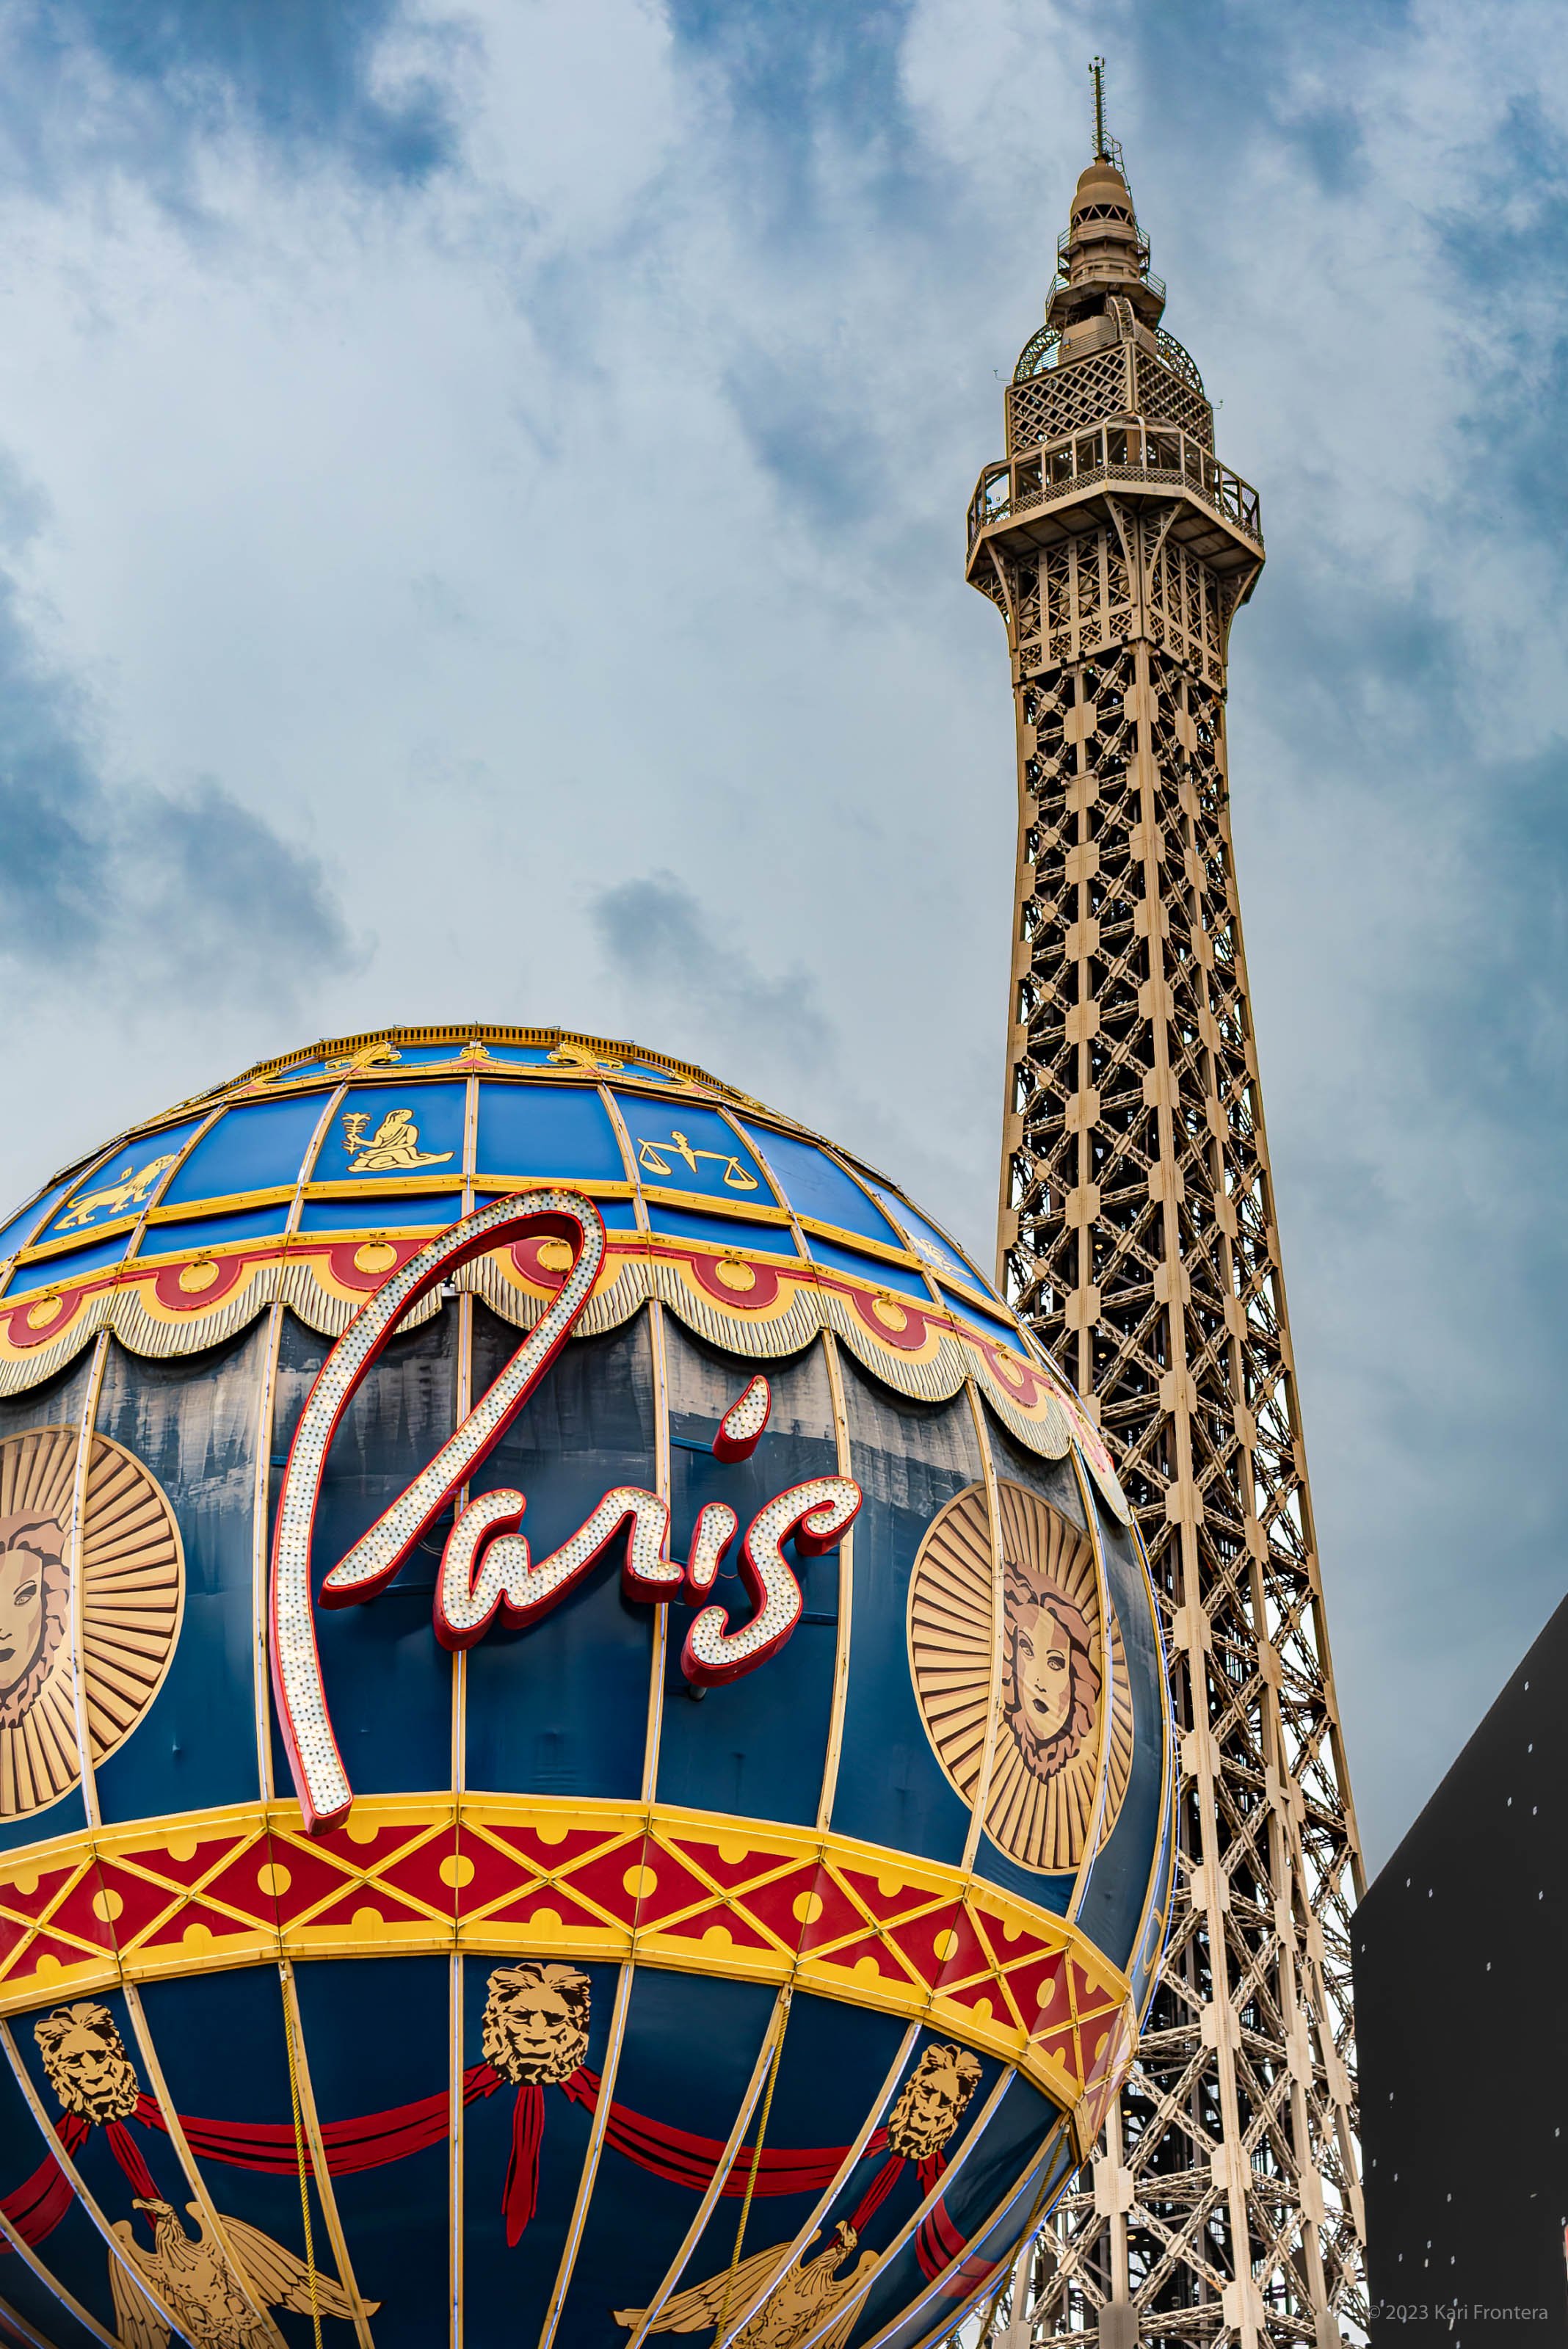 Paris - Las Vegas Style